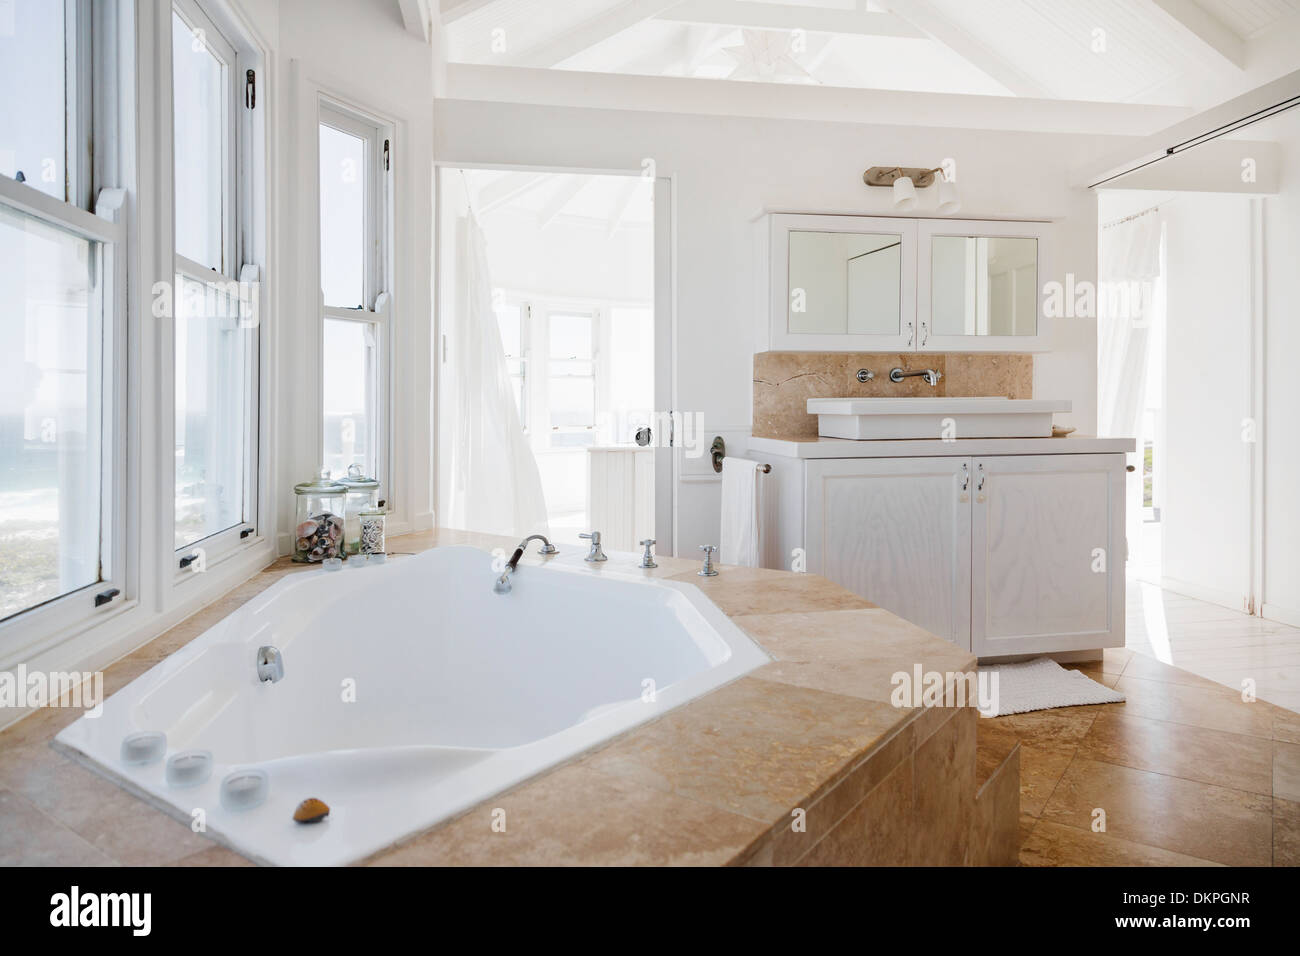 Jacuzzi tub in luxury bathroom Stock Photo